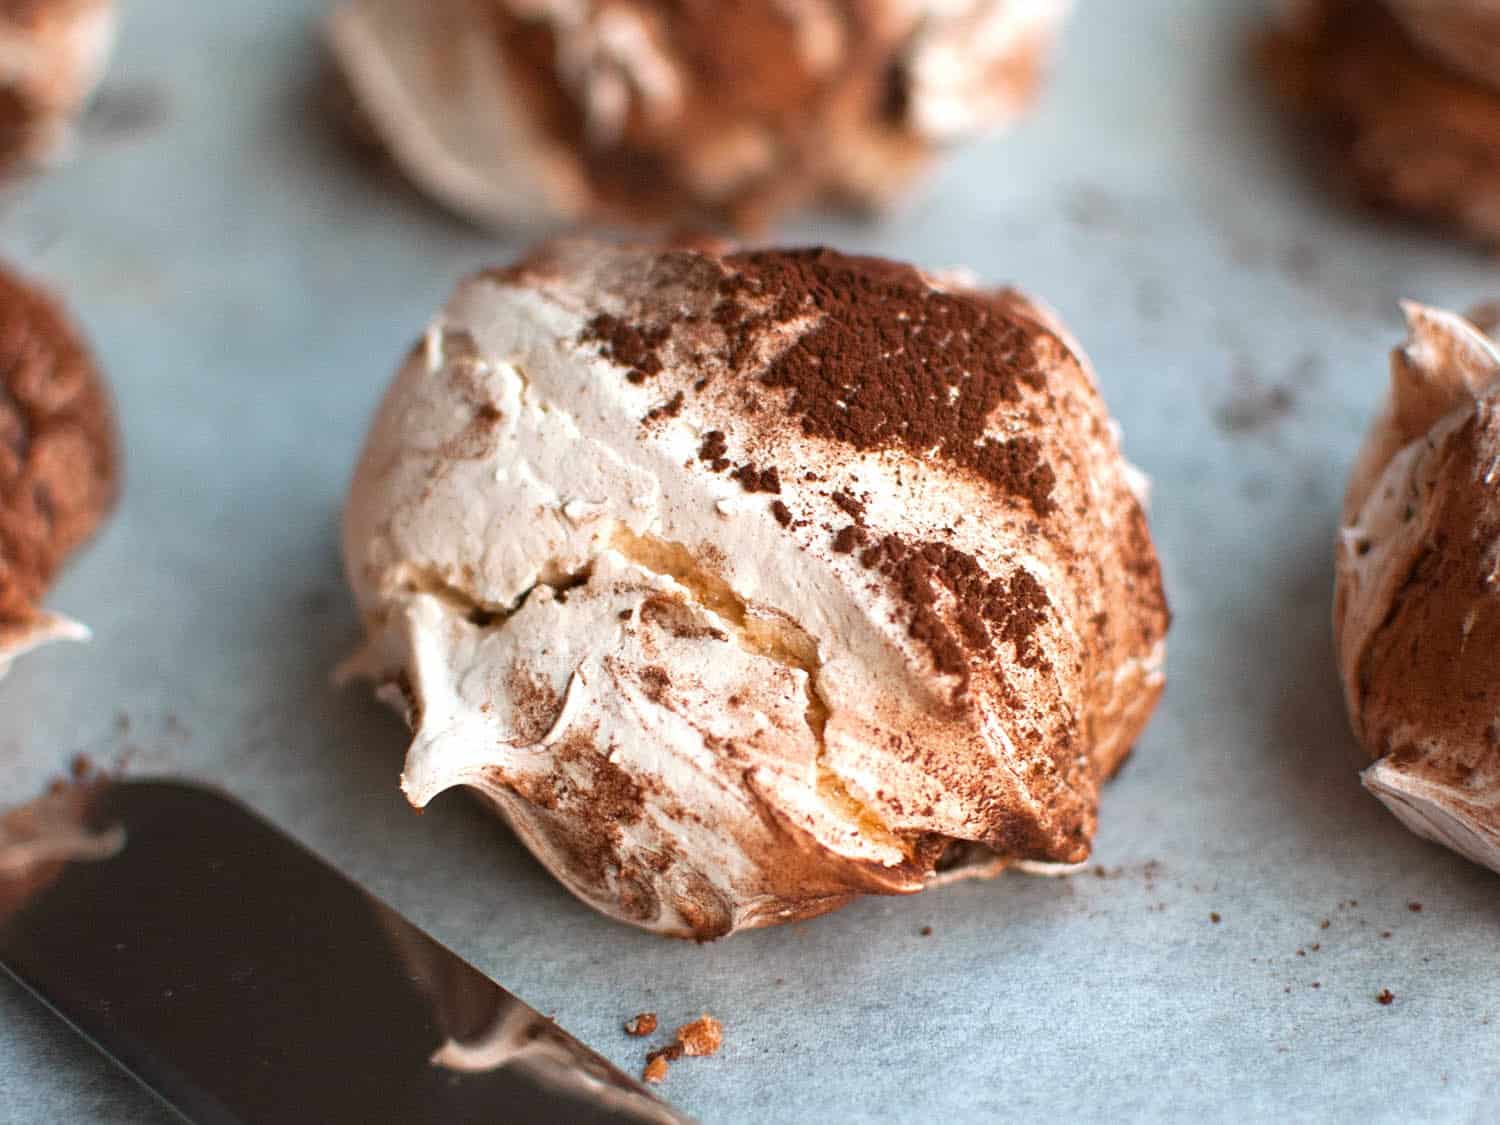 Chocolate cinnamon swirl meringues